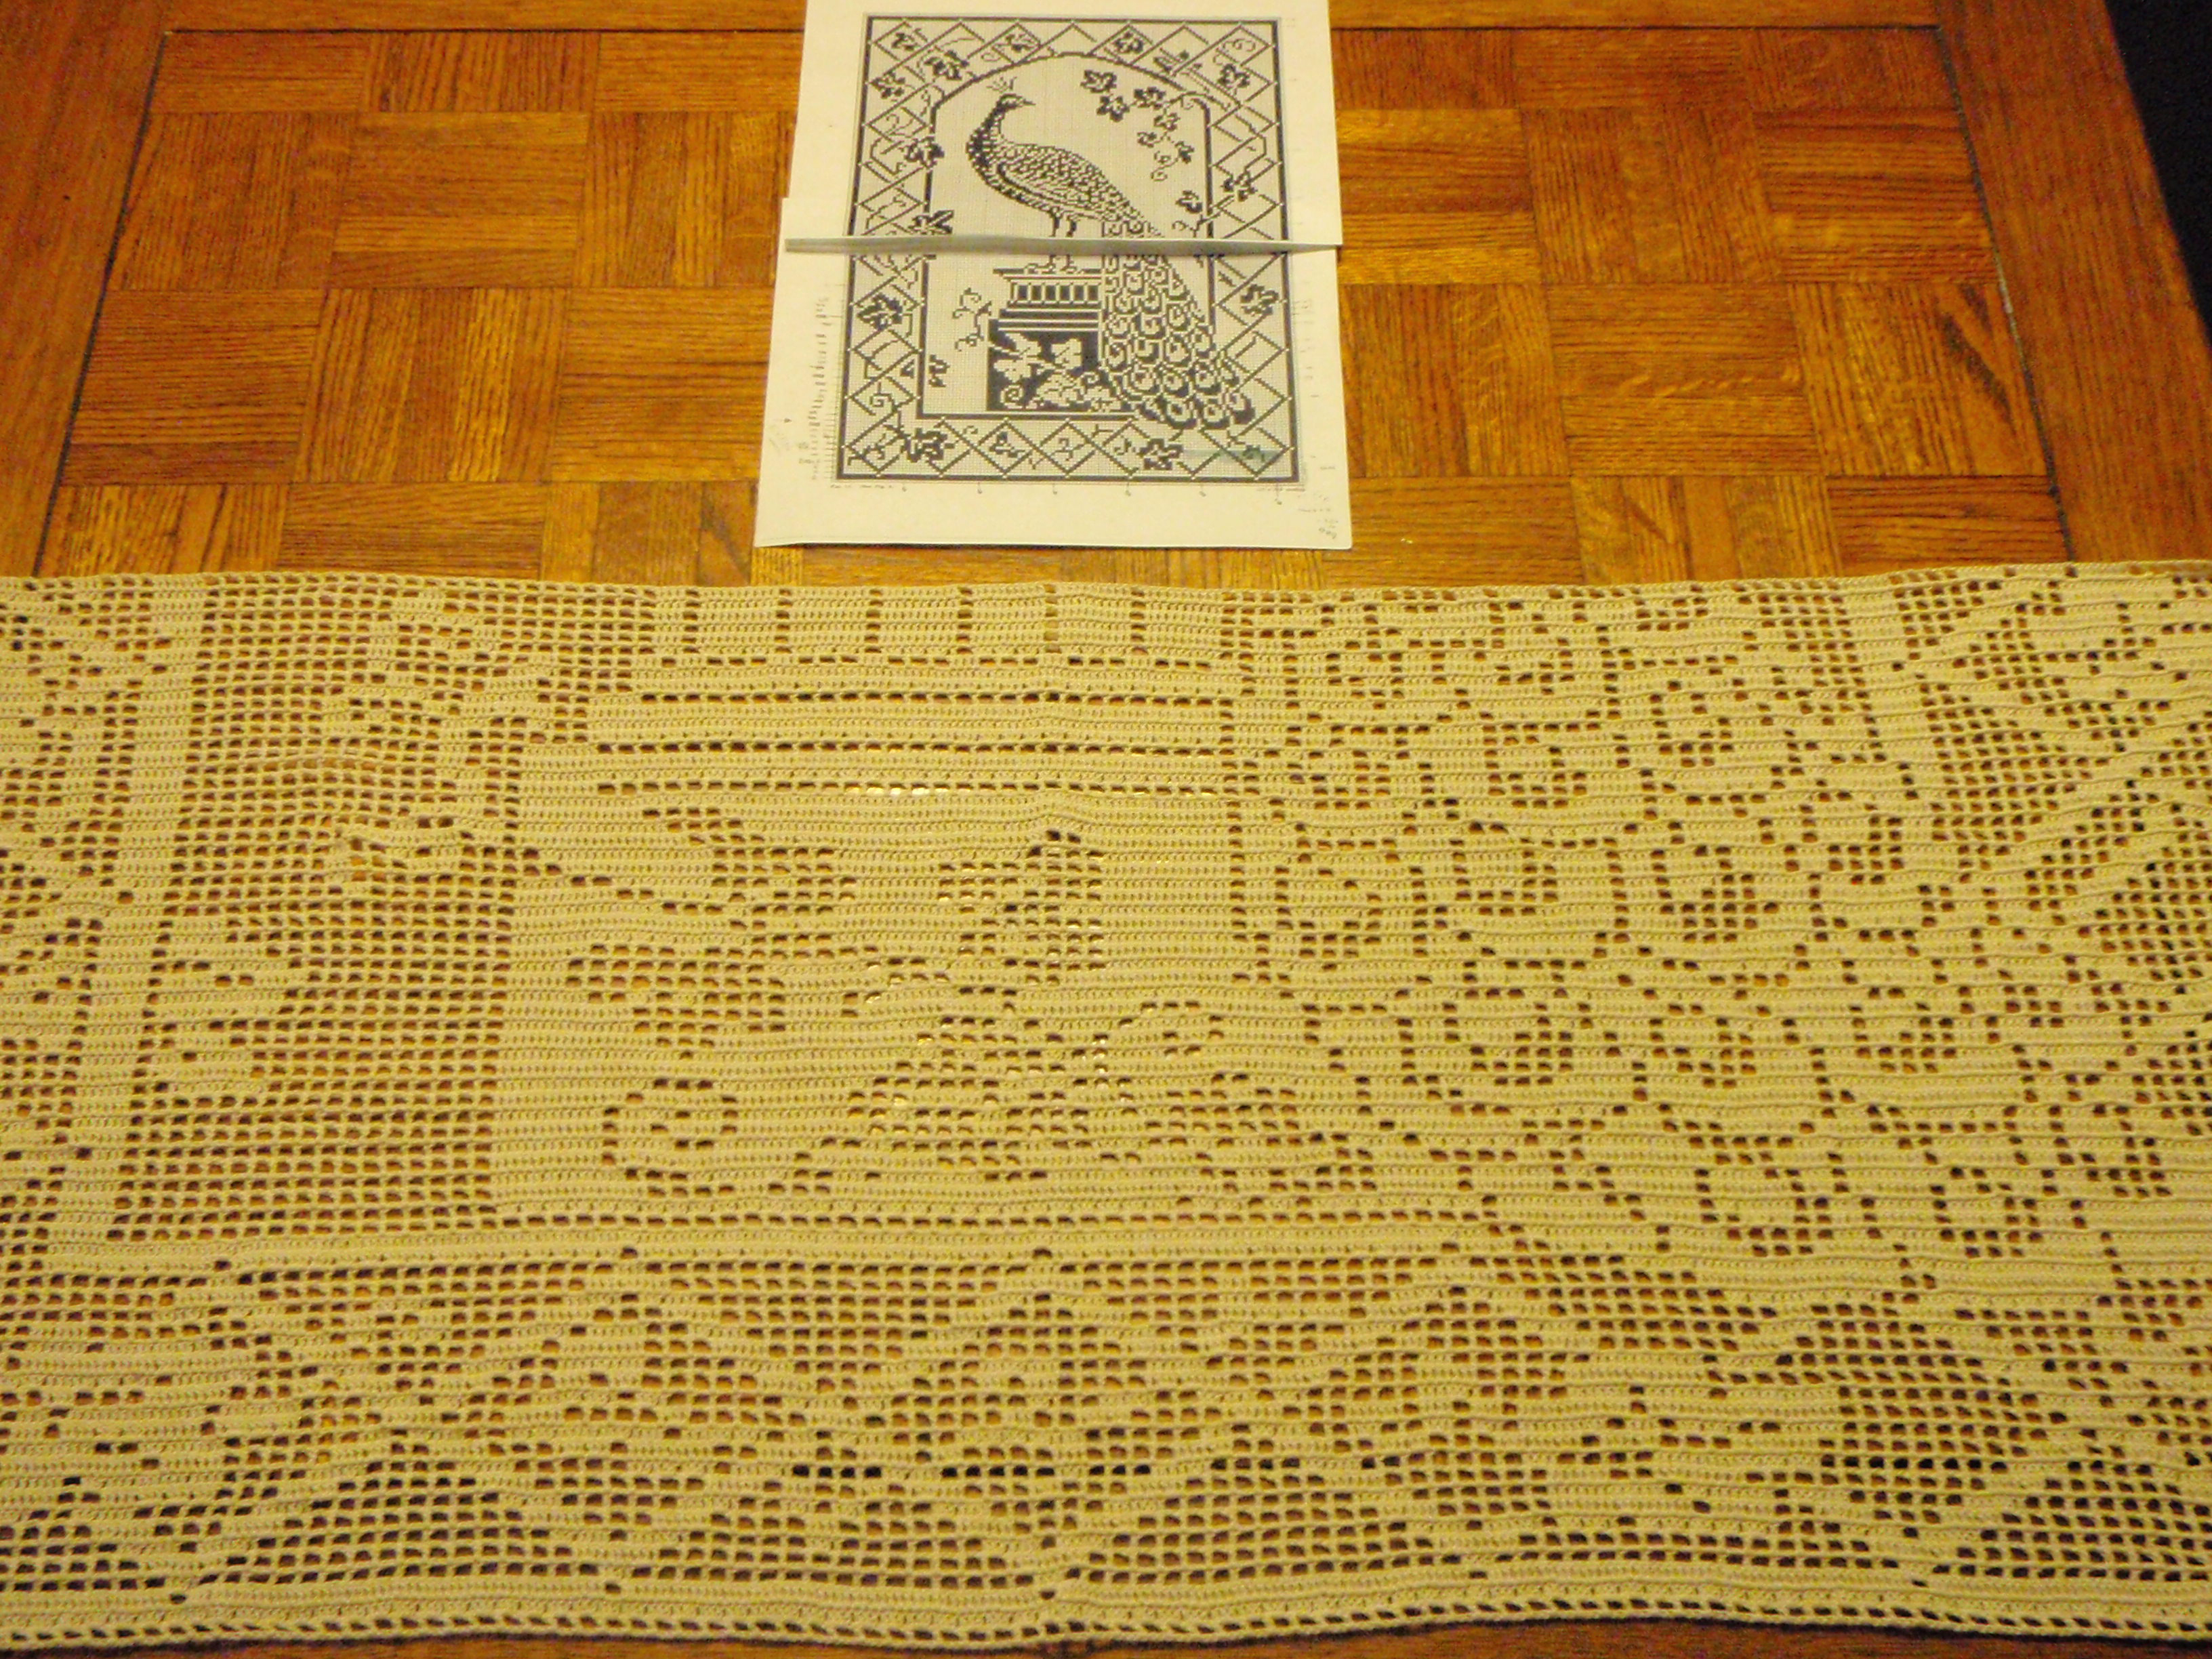 Filet Crochet Afghan Patterns How To Filet Crochet Crochet Thread